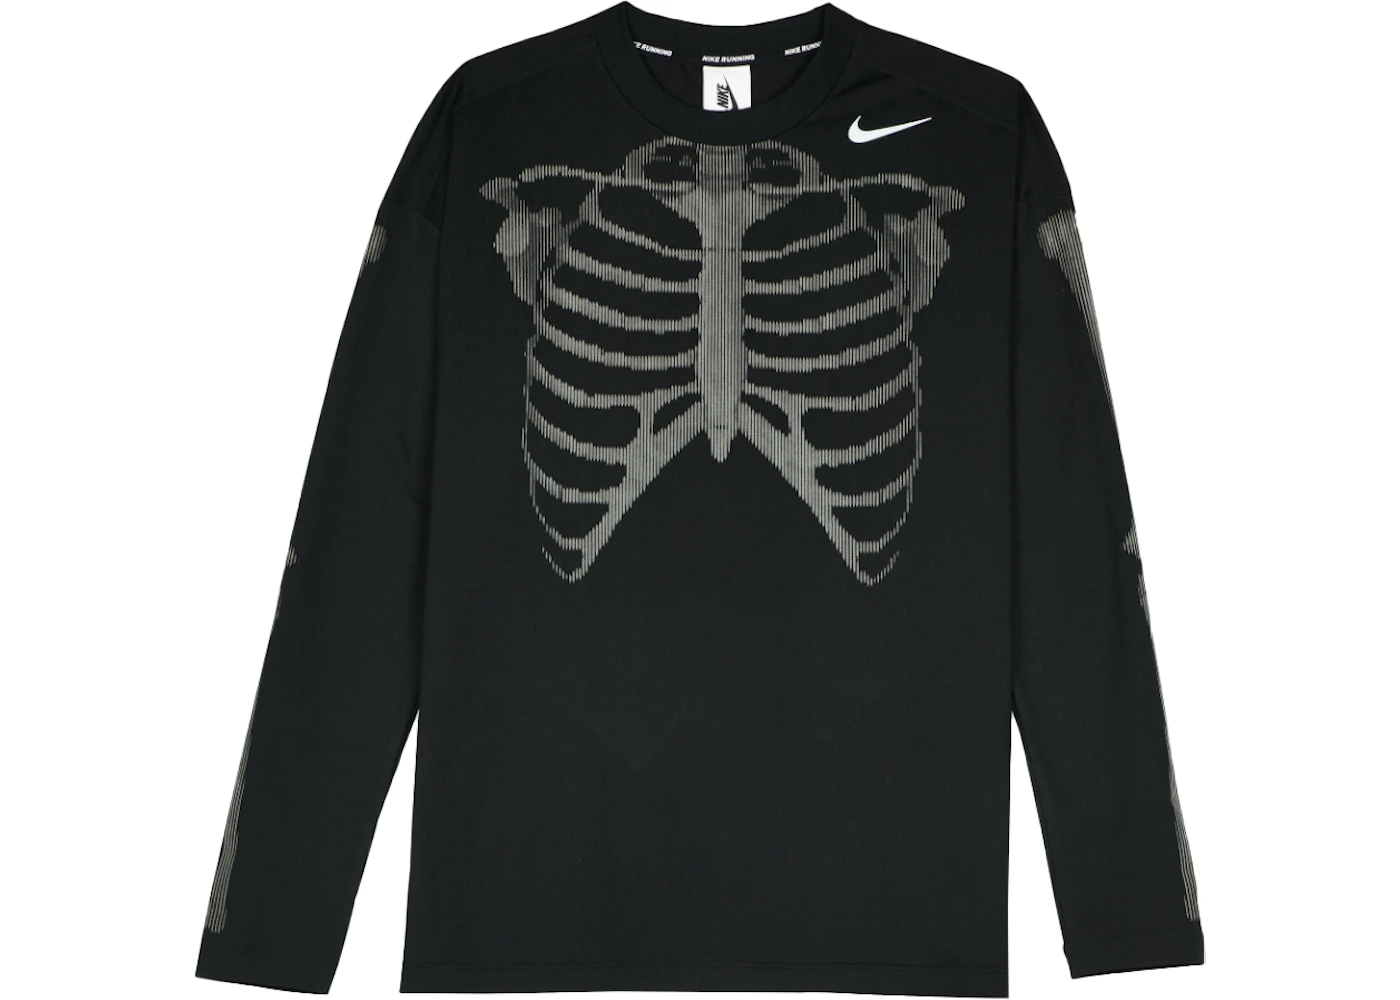 Nike Women's Skeleton Top Black - FW19 - US